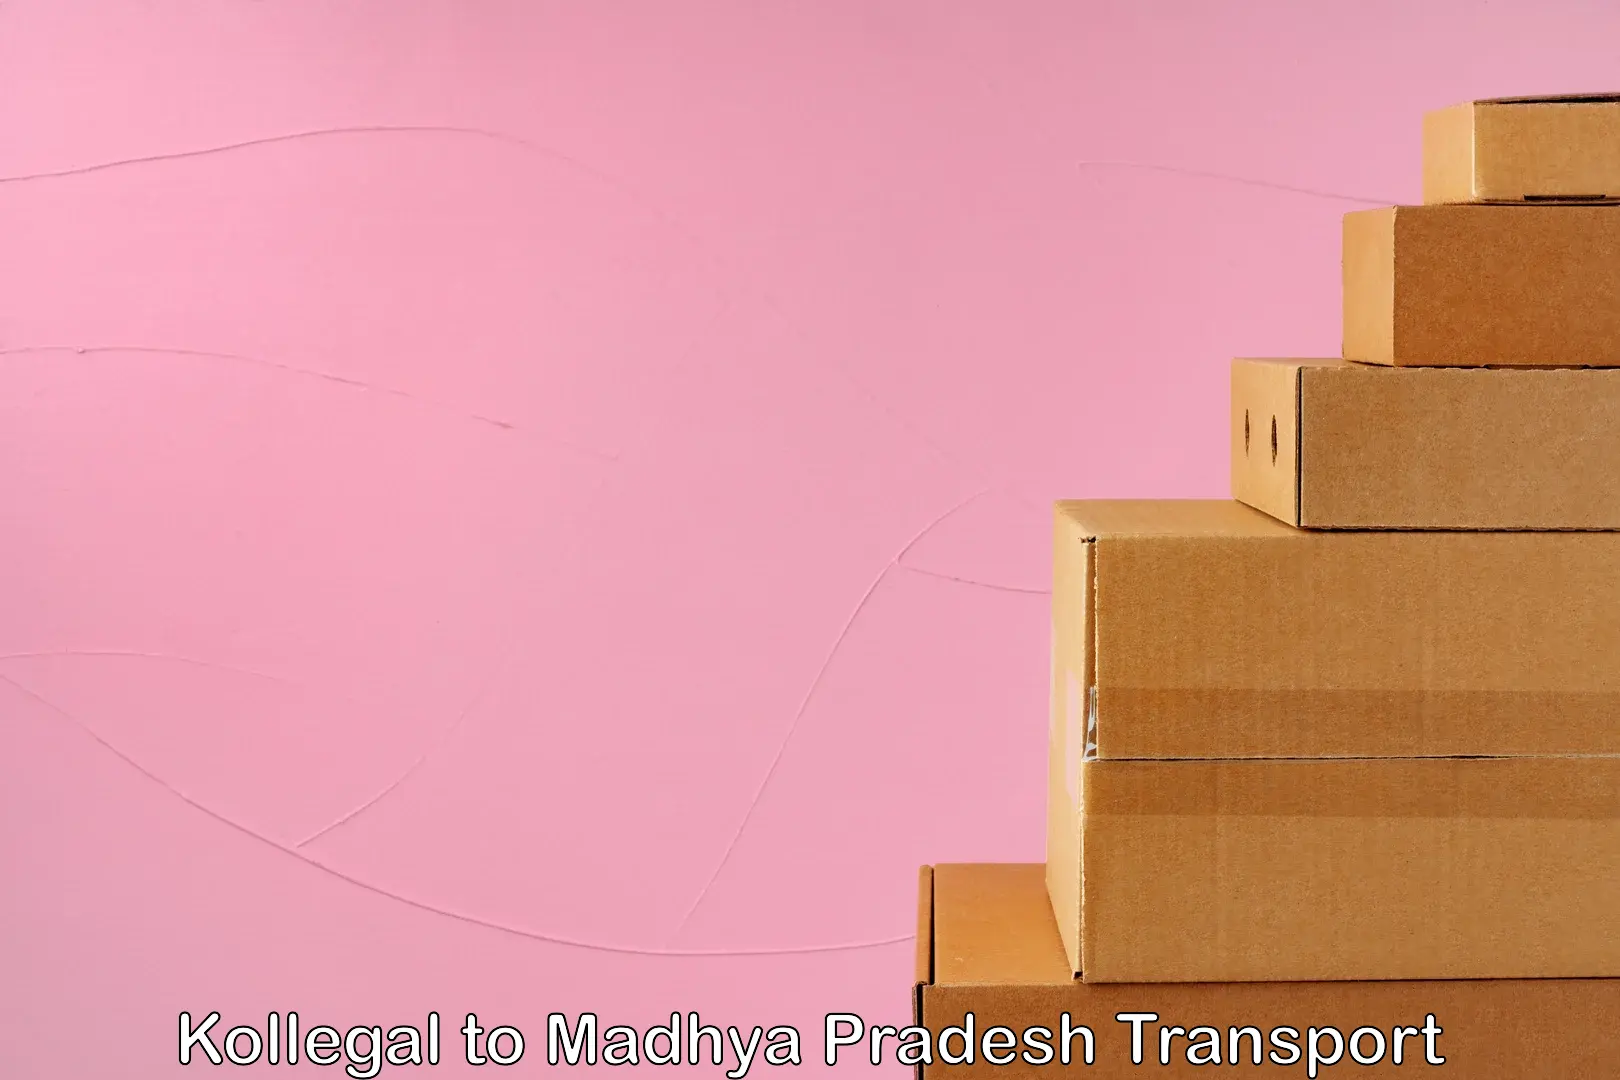 Truck transport companies in India Kollegal to Khajuraho